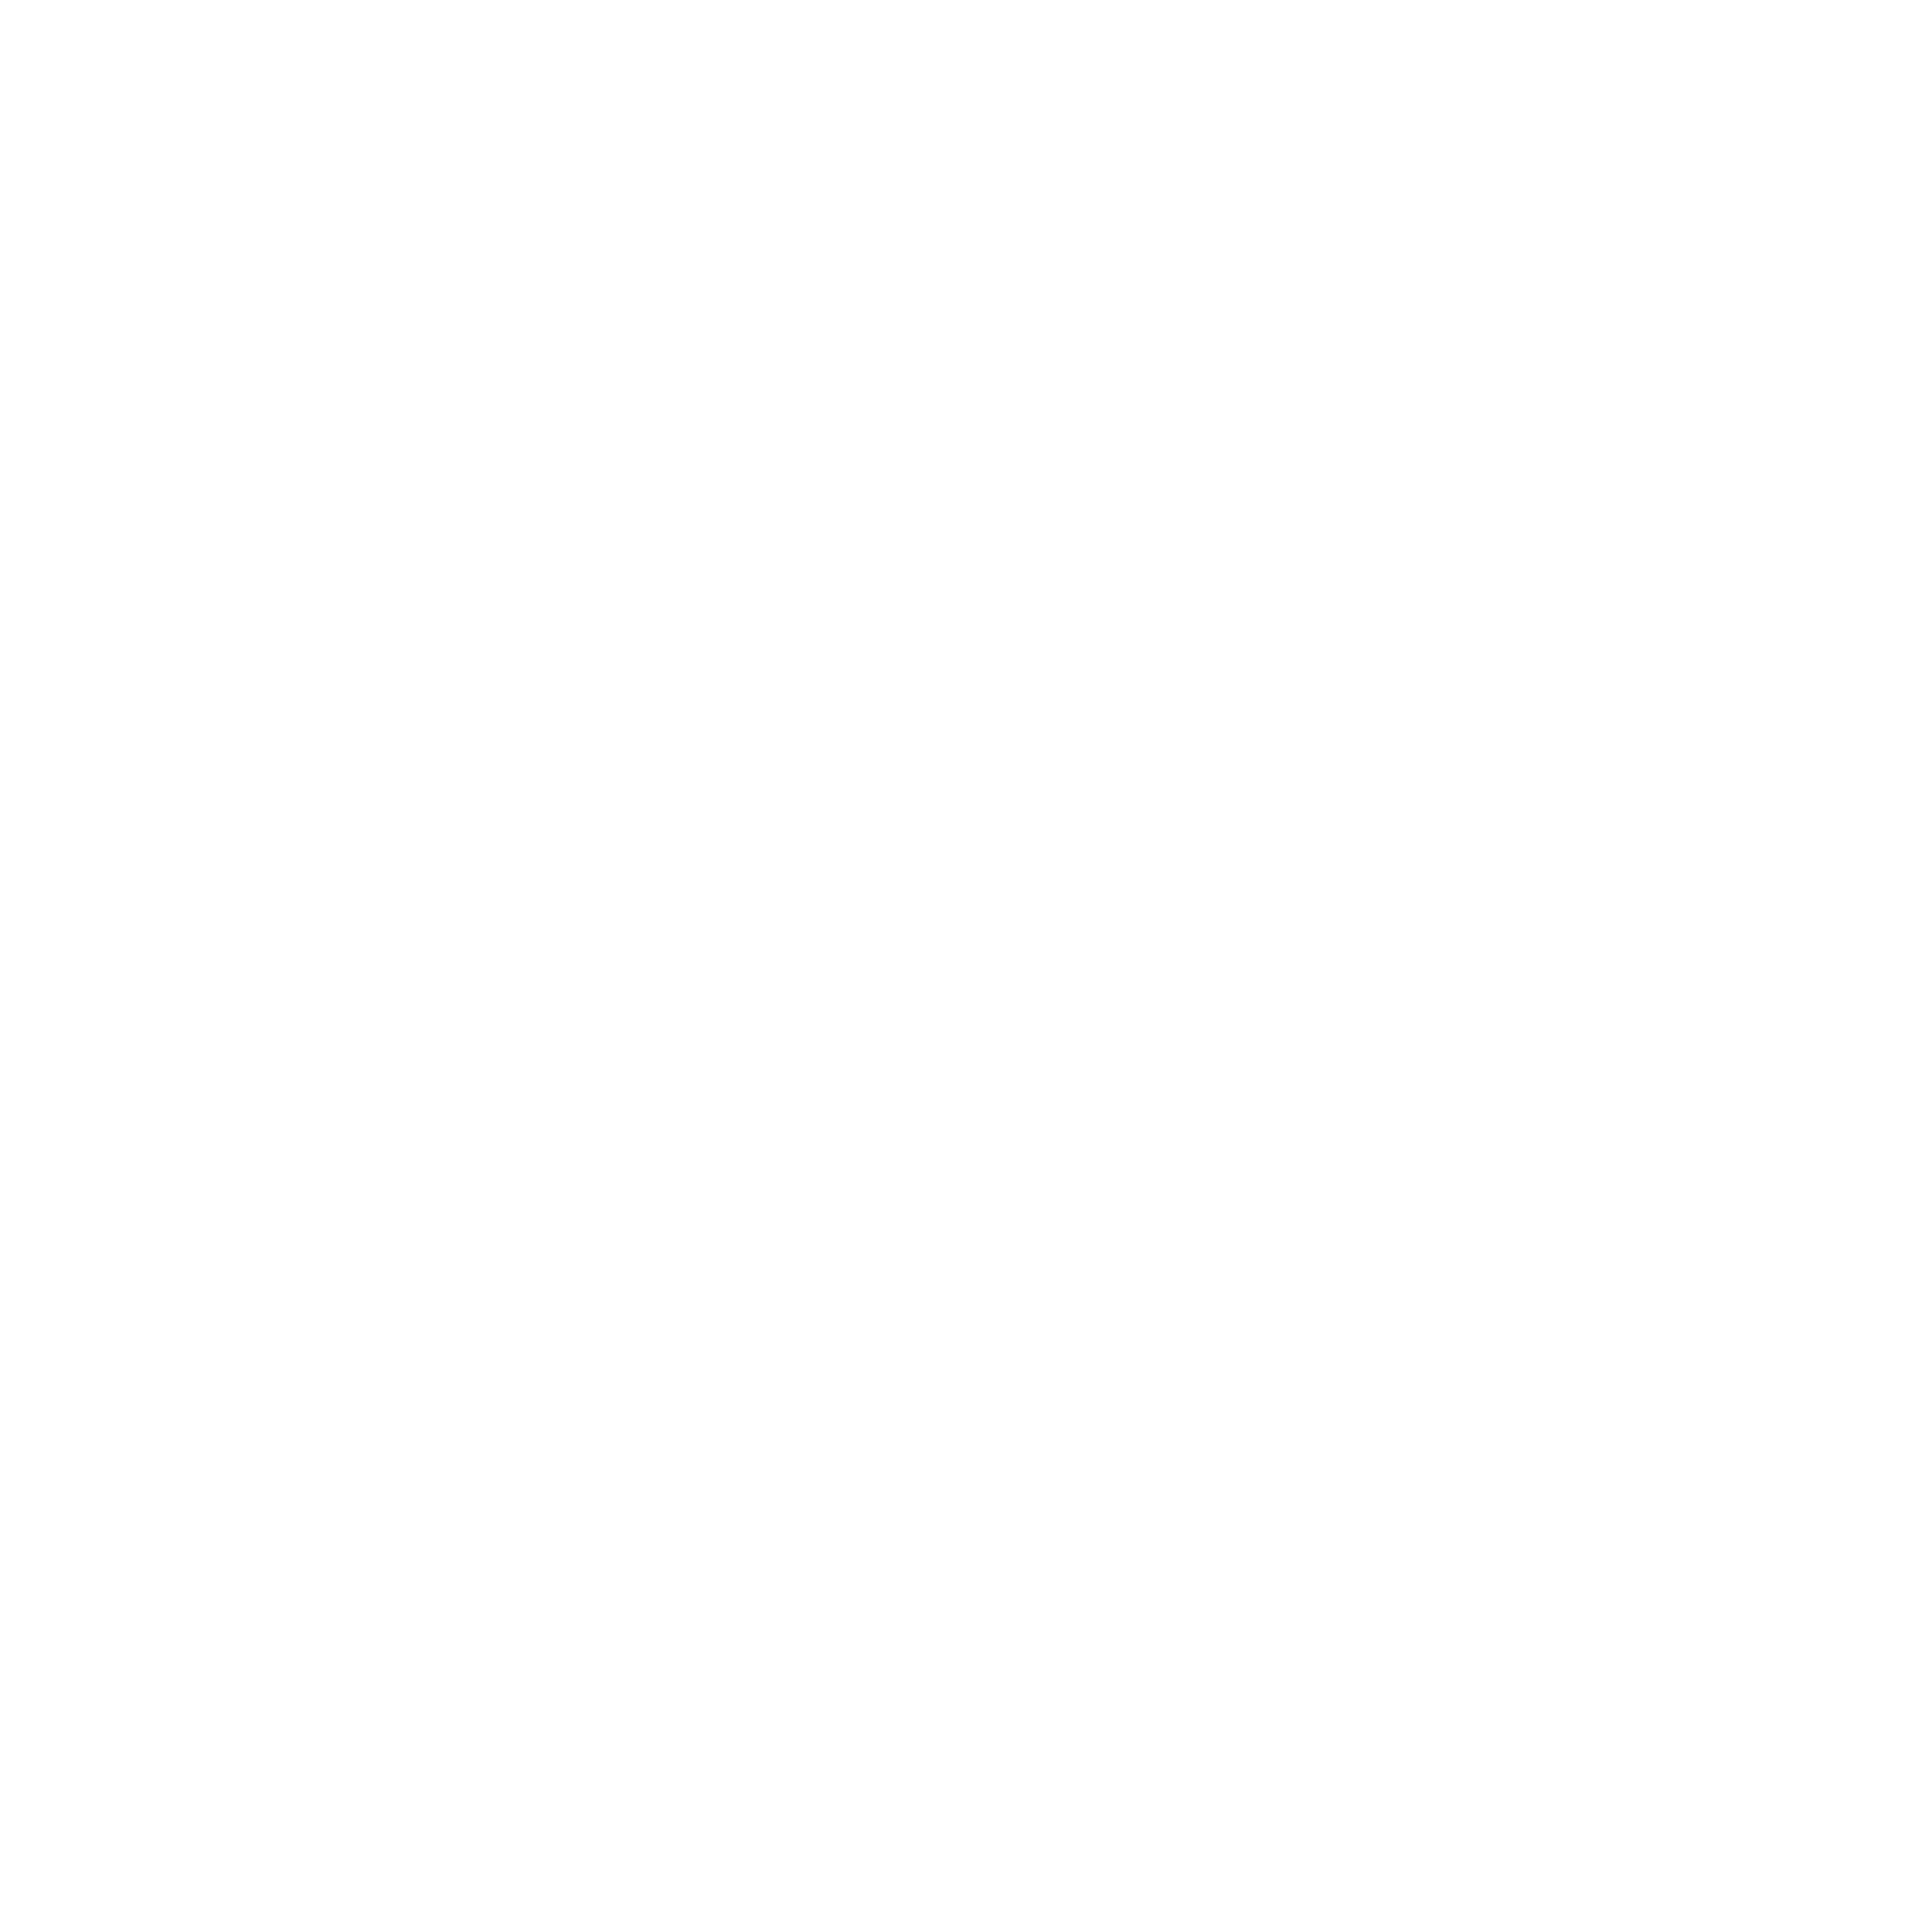 novartis-1-logo-black-and-white